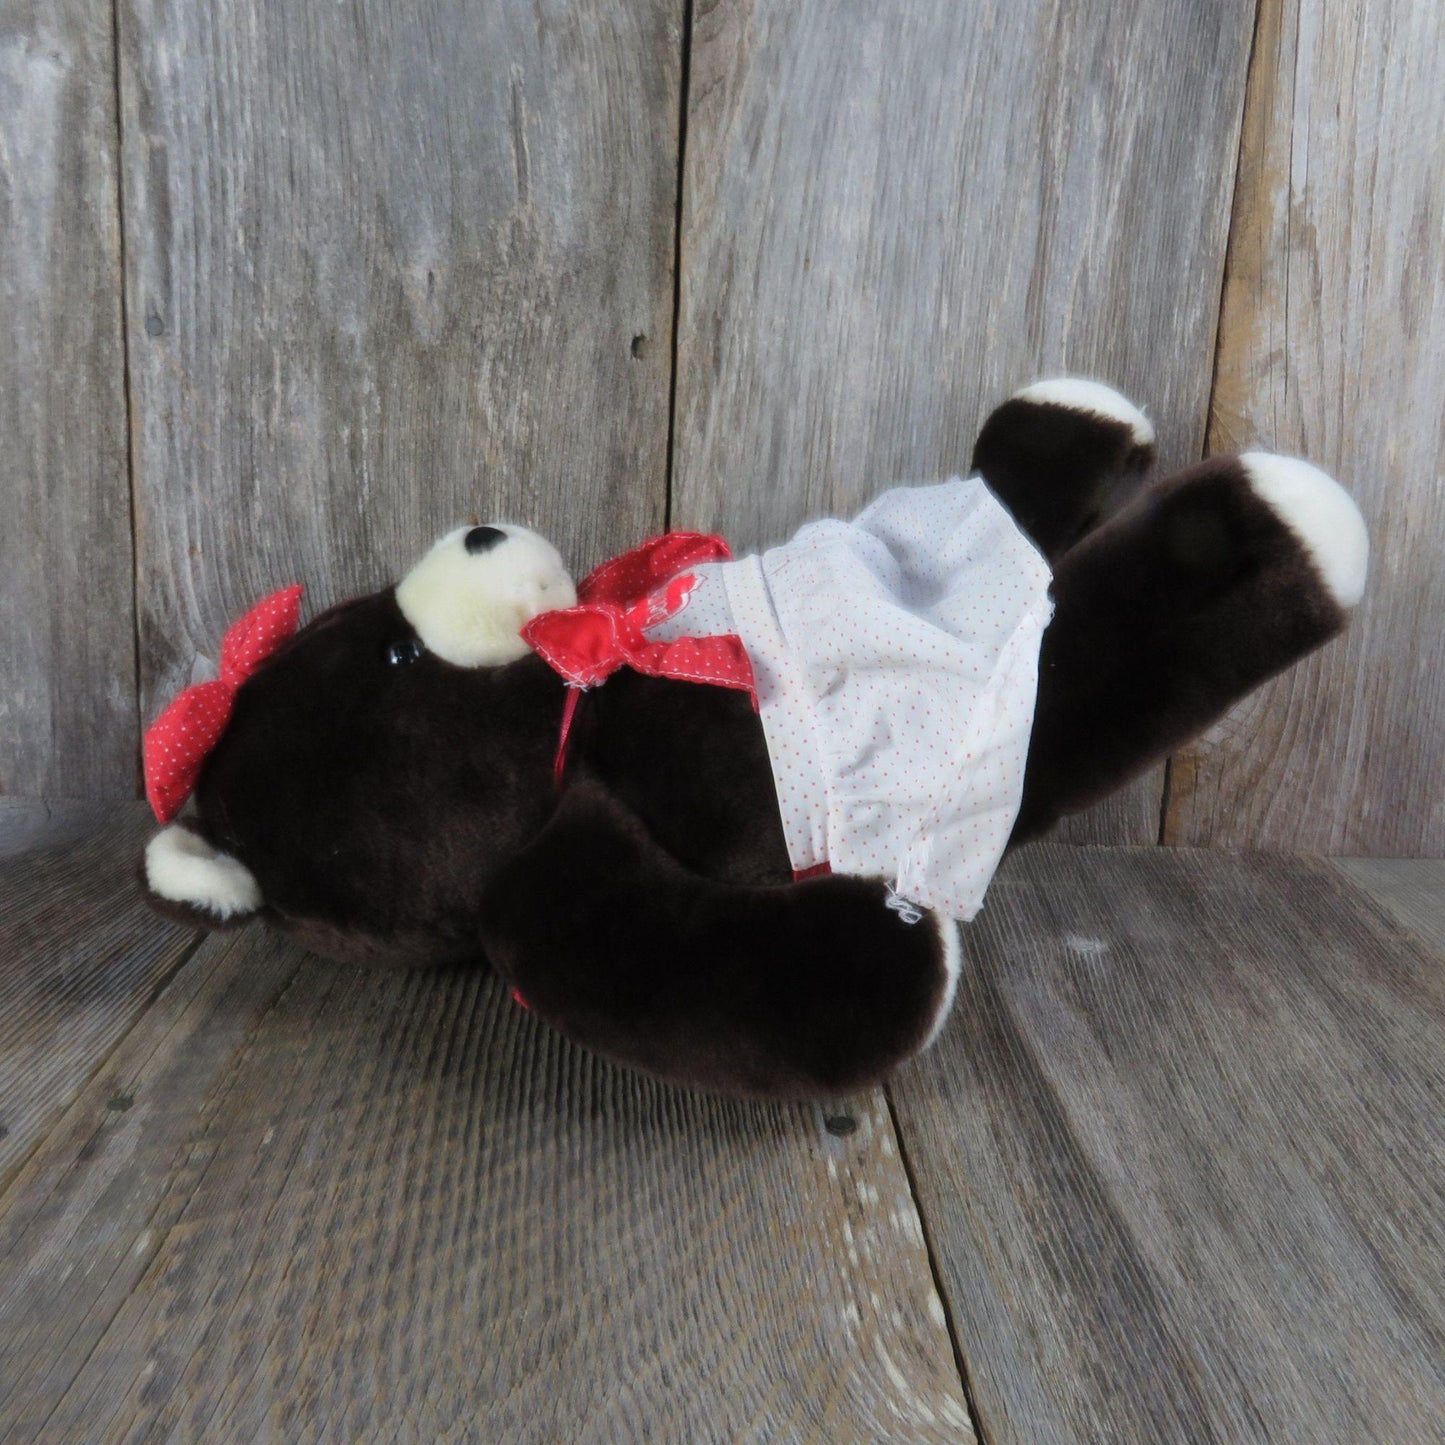 Vintage Del Monte Del Monte Red White Apron Bow Dark Brown Stuffed Animal Animal Fair Korea